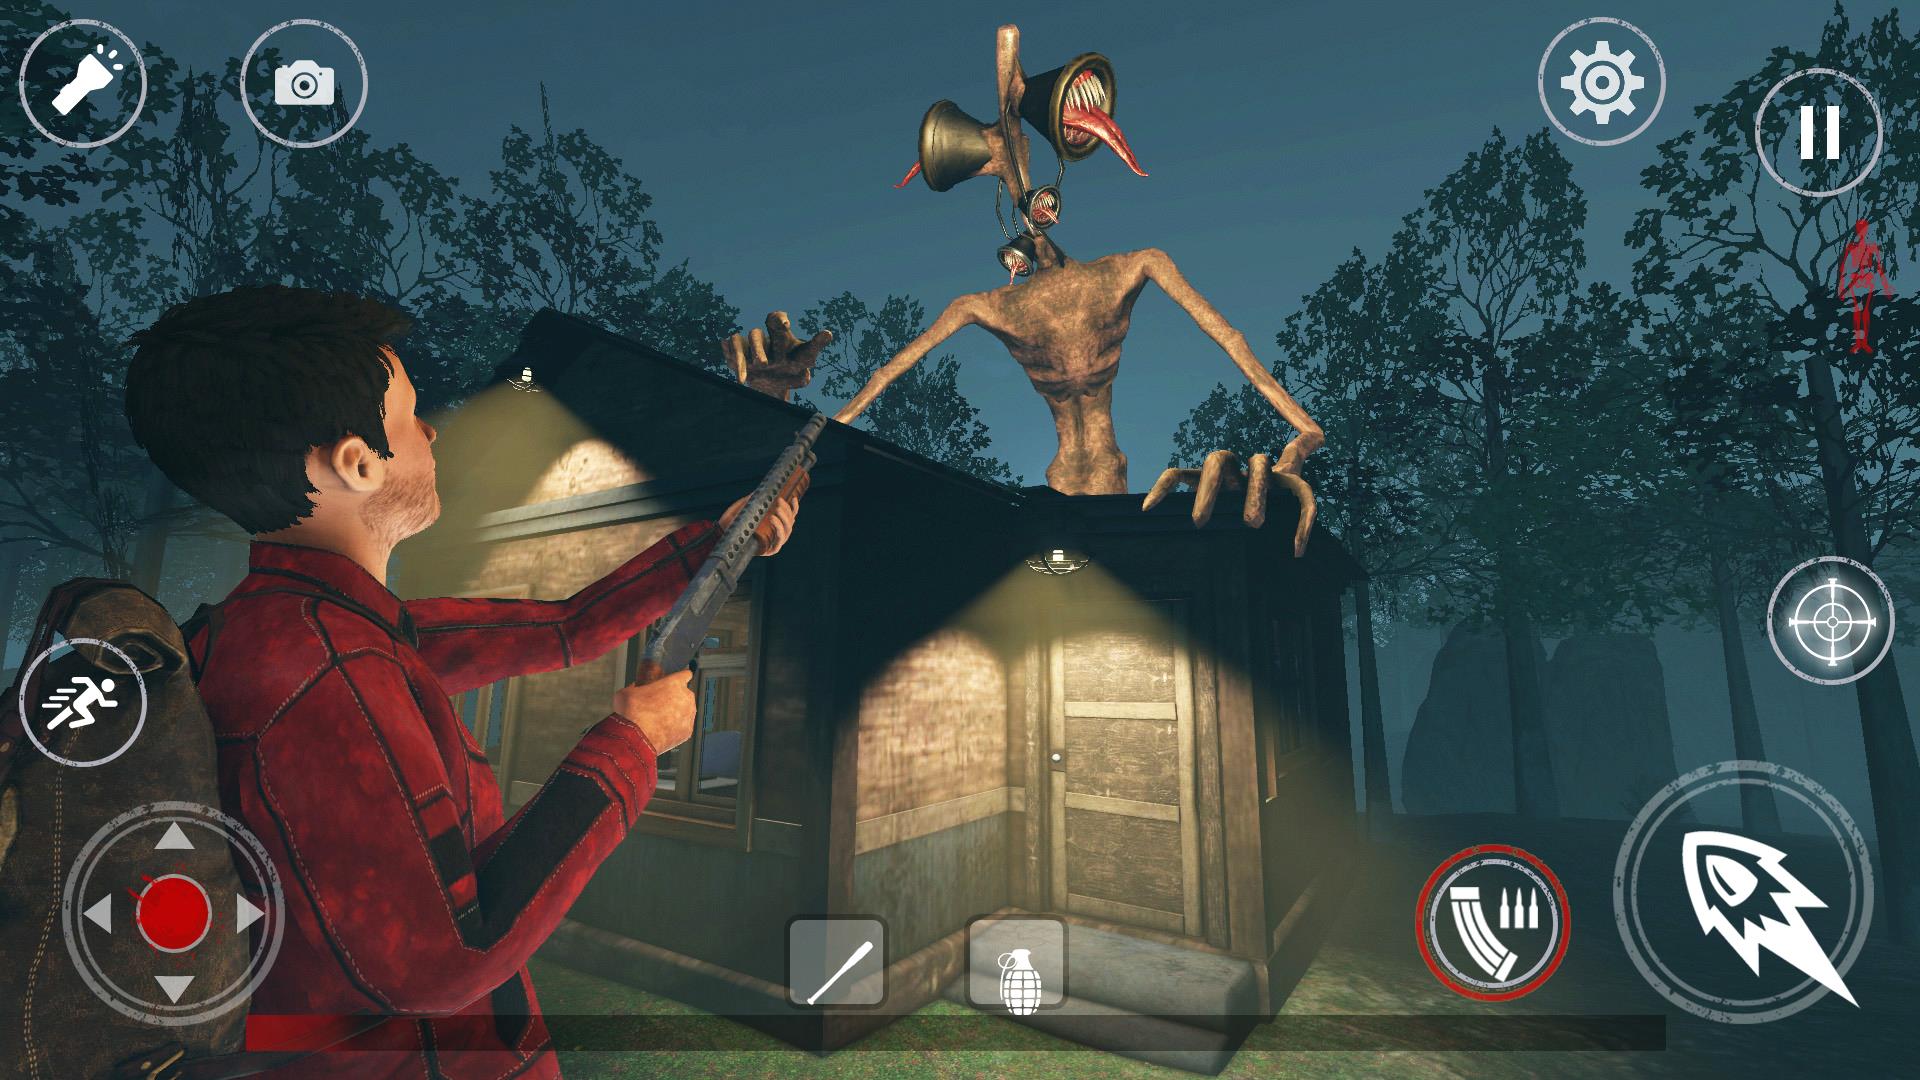 Siren Scary Head - Horror Game Screenshot 12